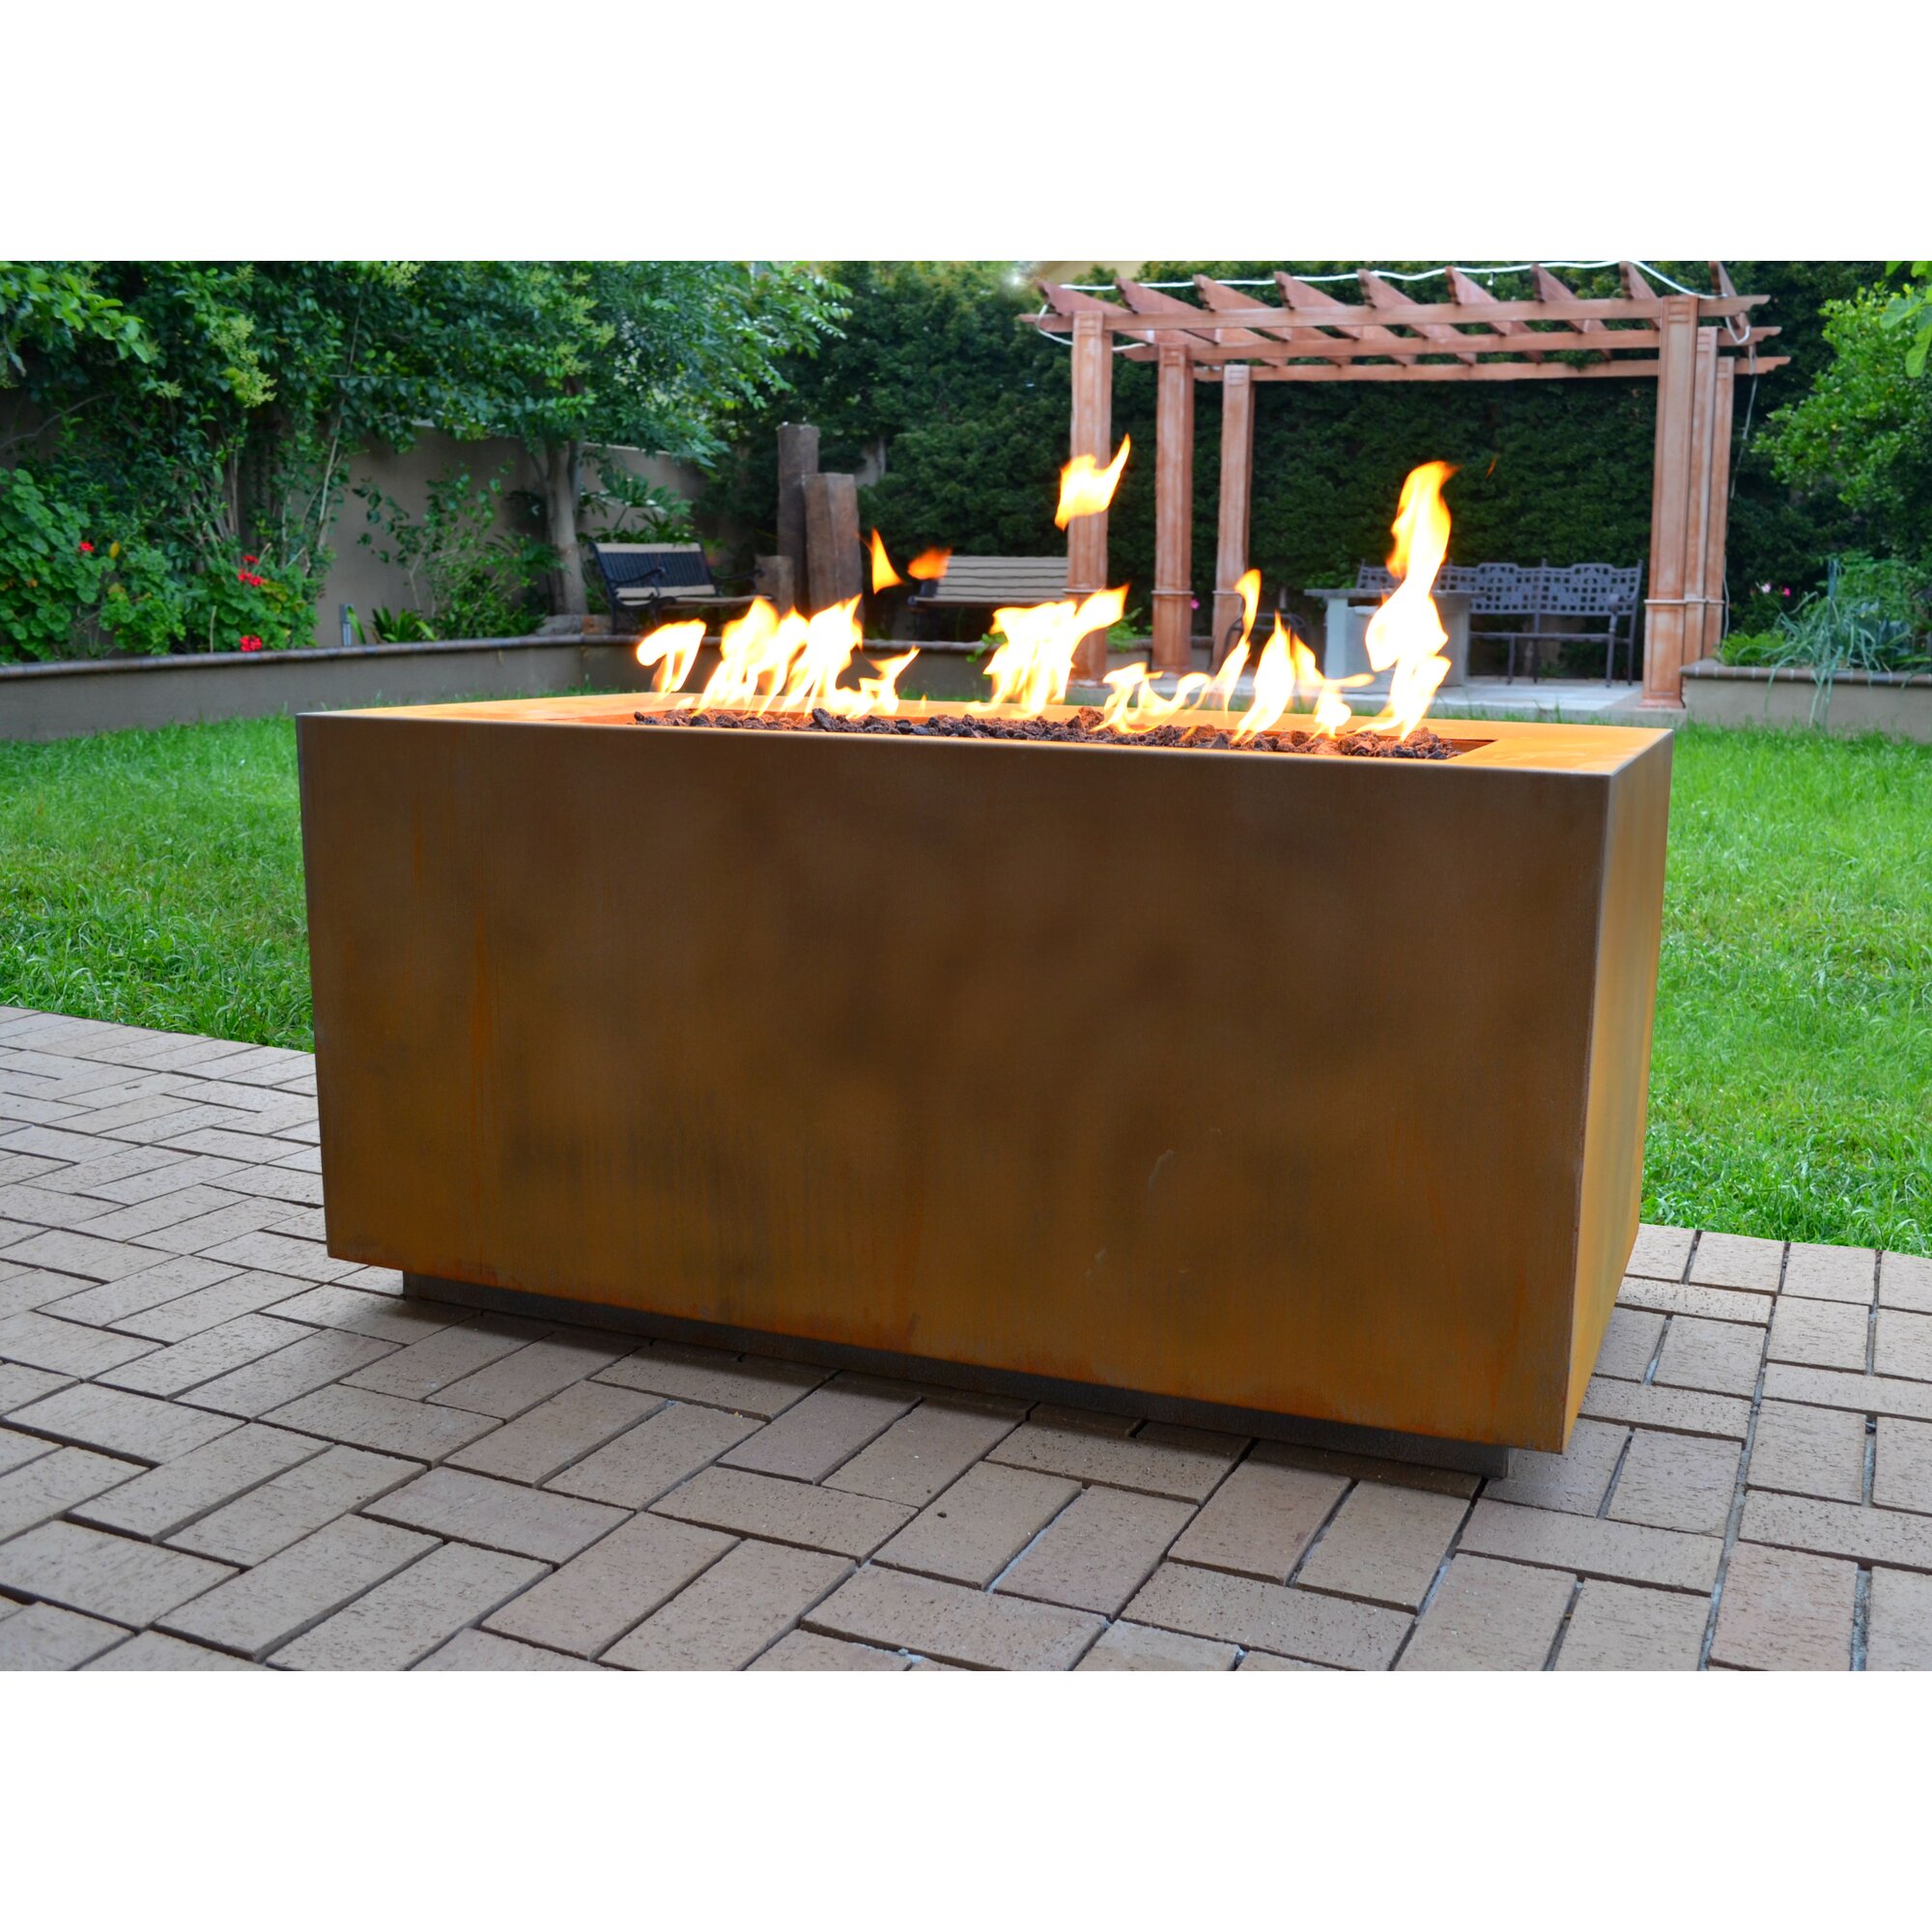 The Outdoor Plus Corten Steel Propane Fire Pit Table ...